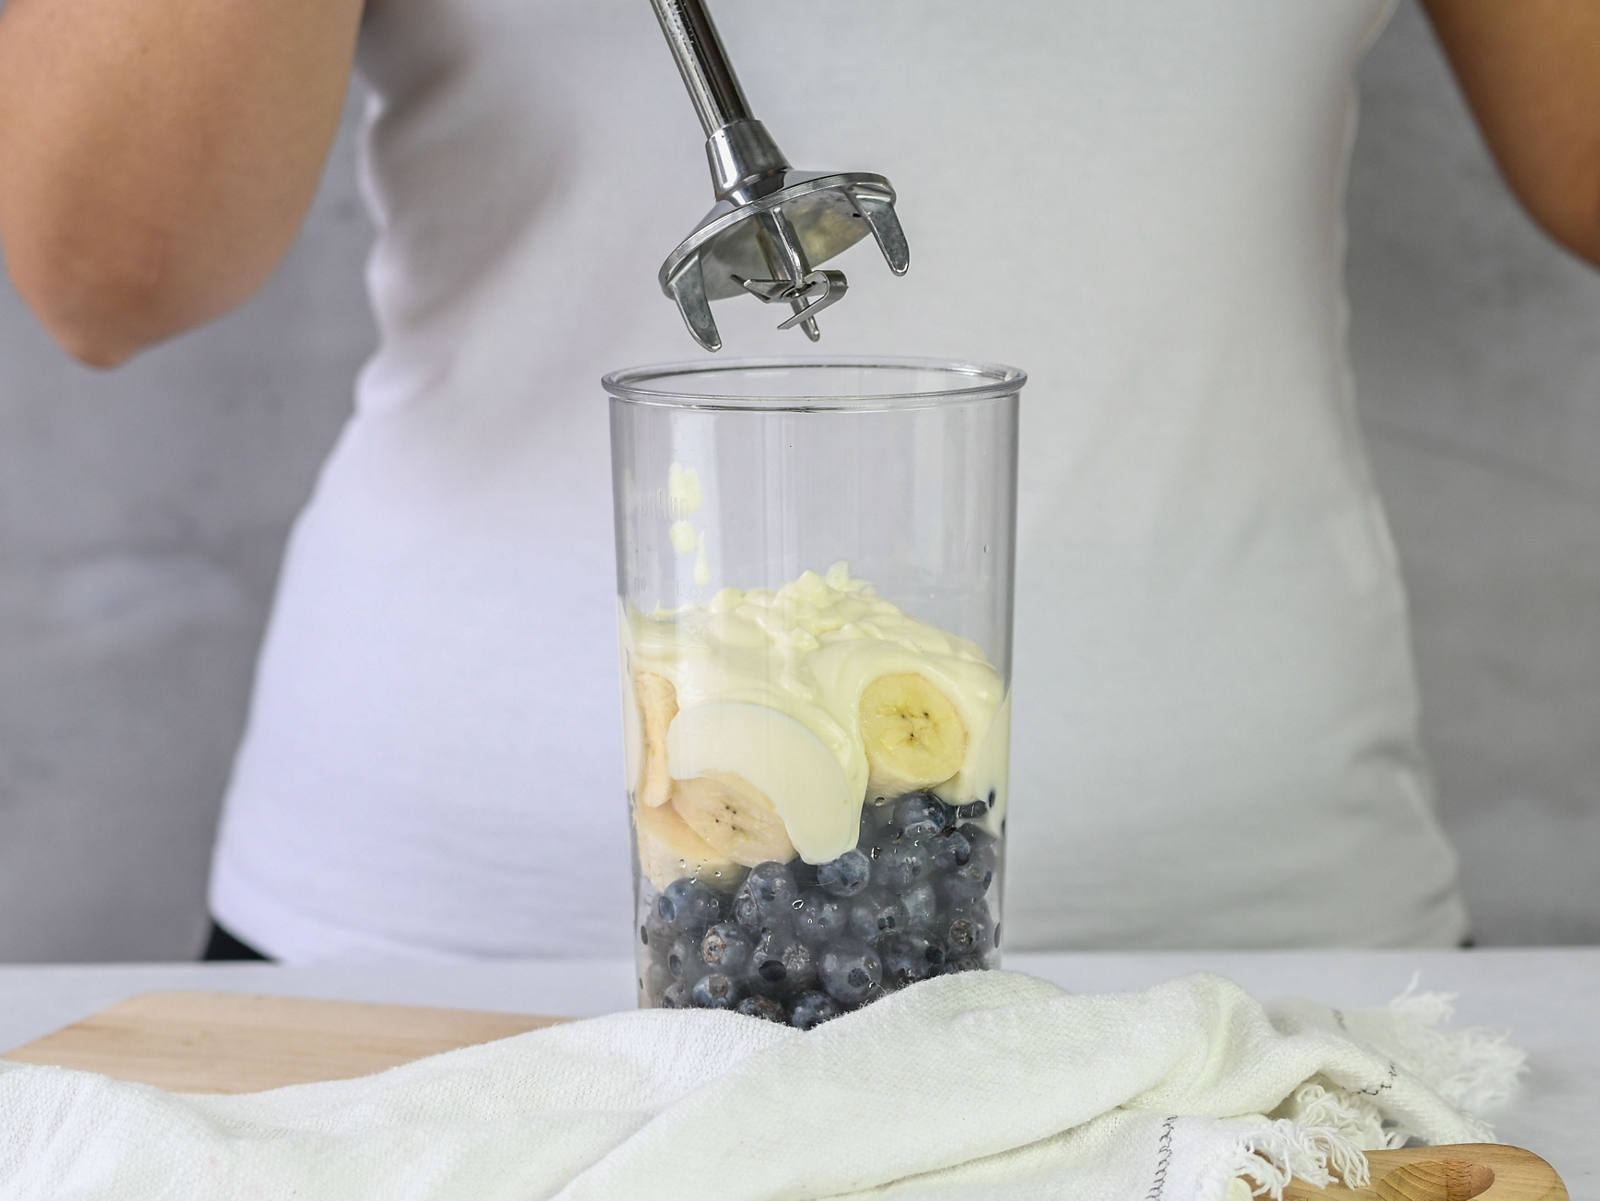 Make your own blueberry-yoghurt ice cream: Mix